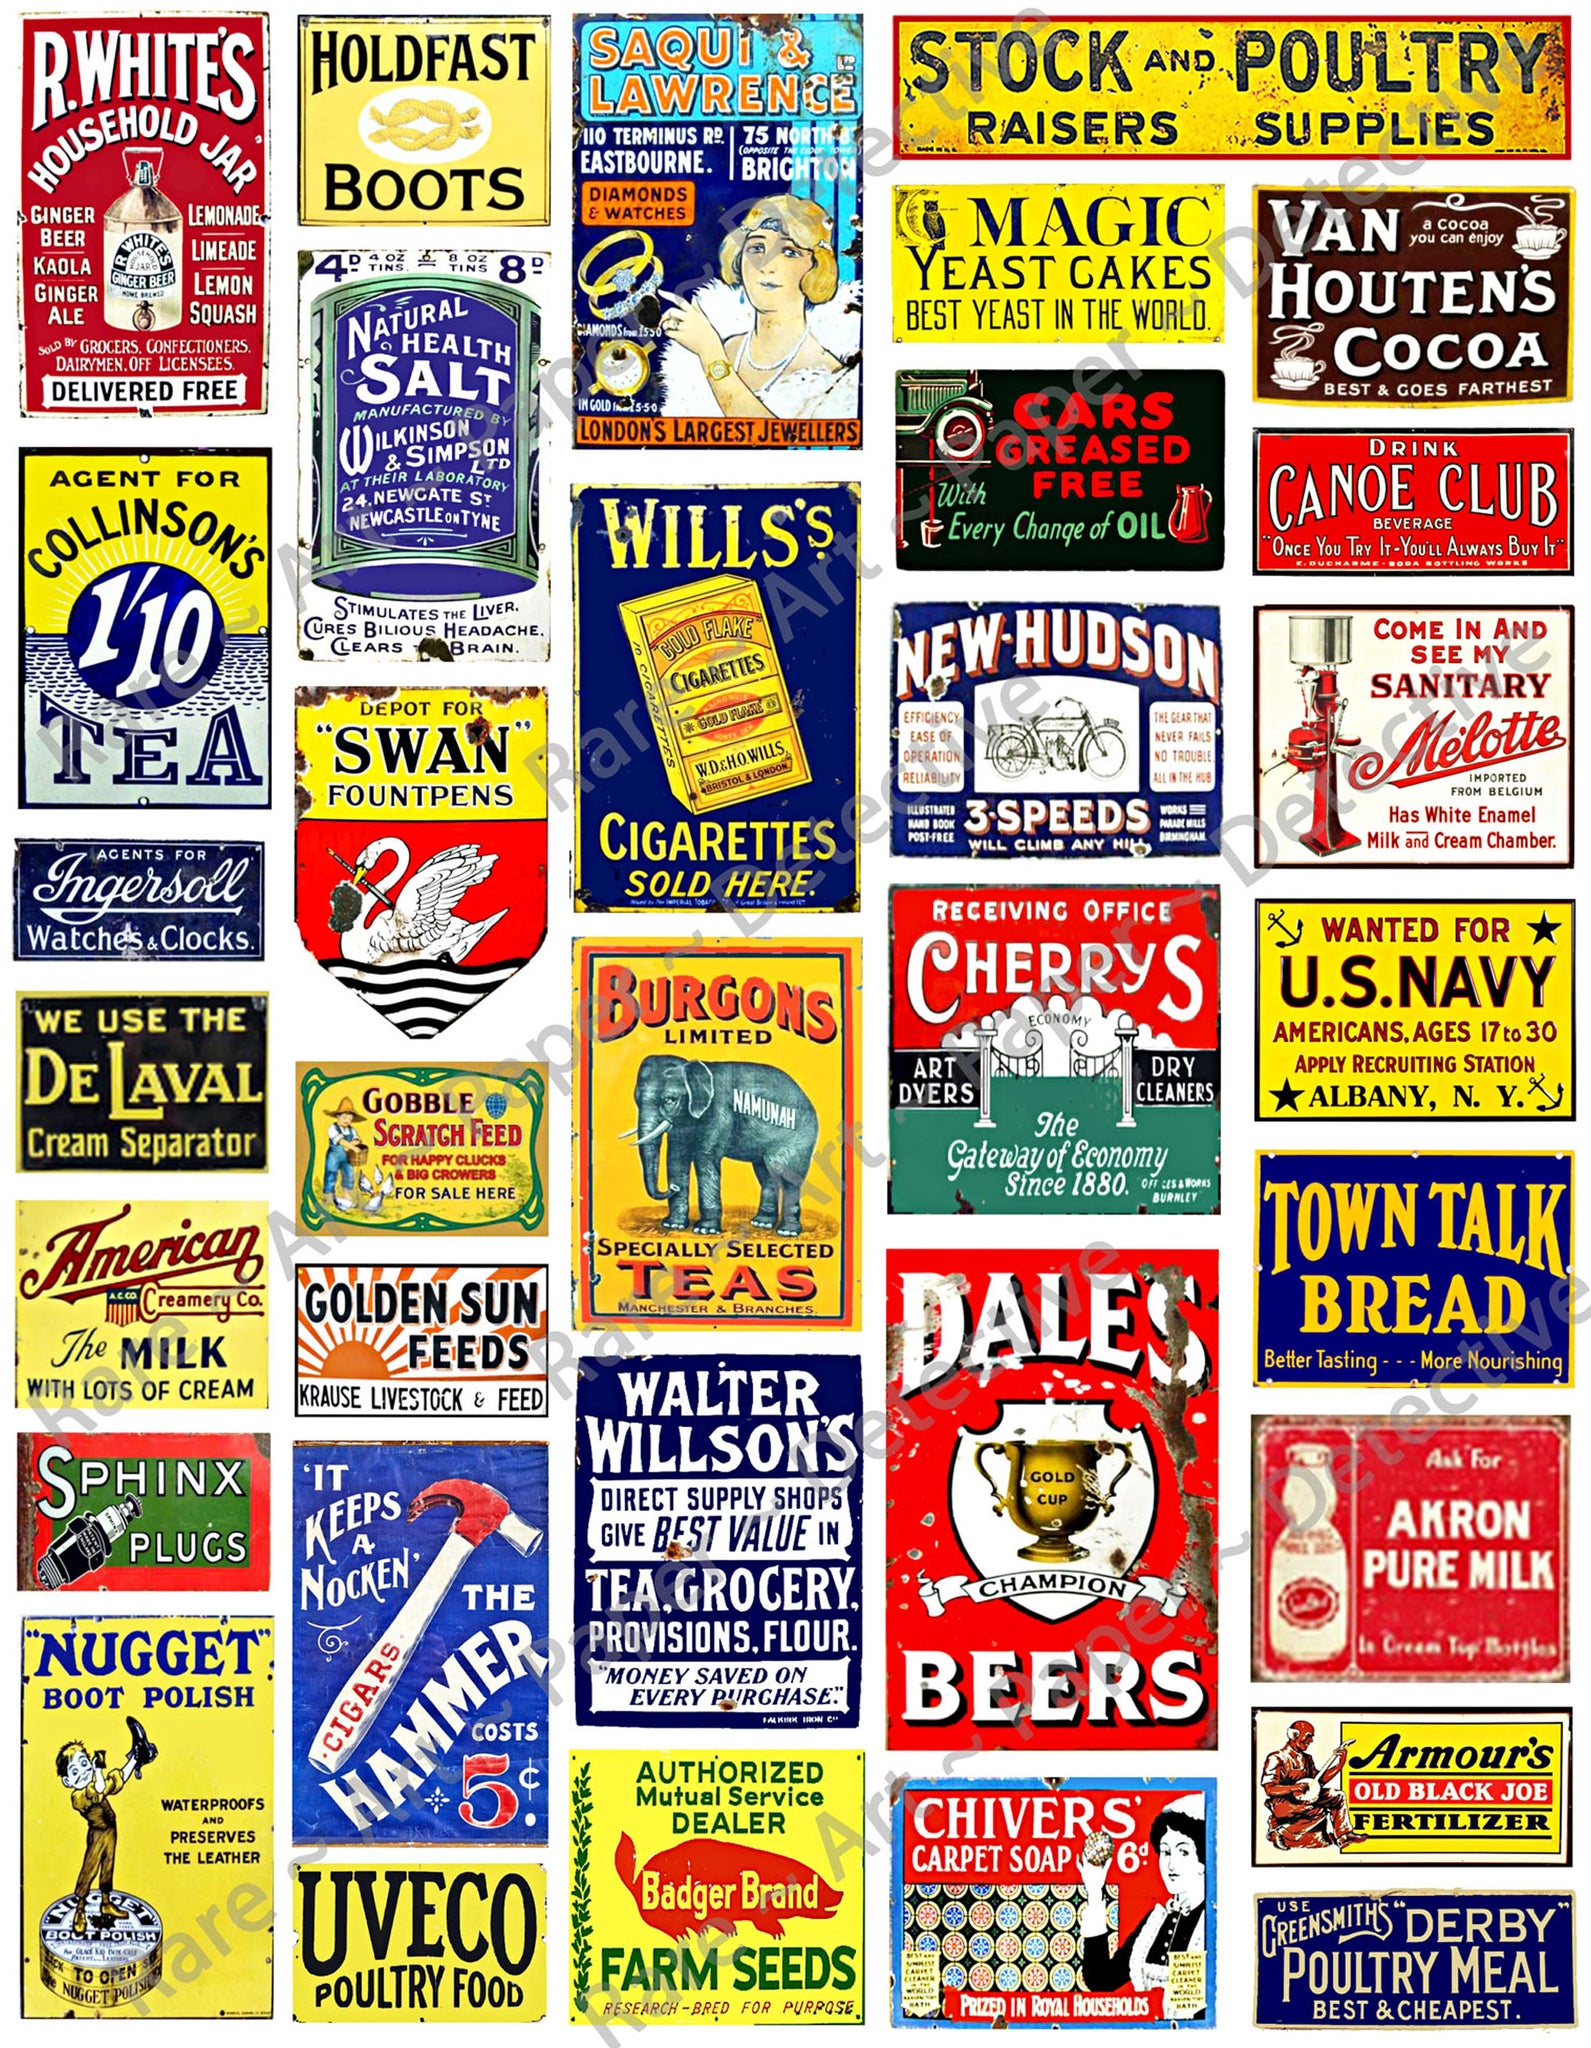 Scale Model Train & Doll House Miniature Sign Stickers, 34 Pcs. Set, G Gauge Railroad Sign Illustrations, 8.5" x 11" Sheet, #1002